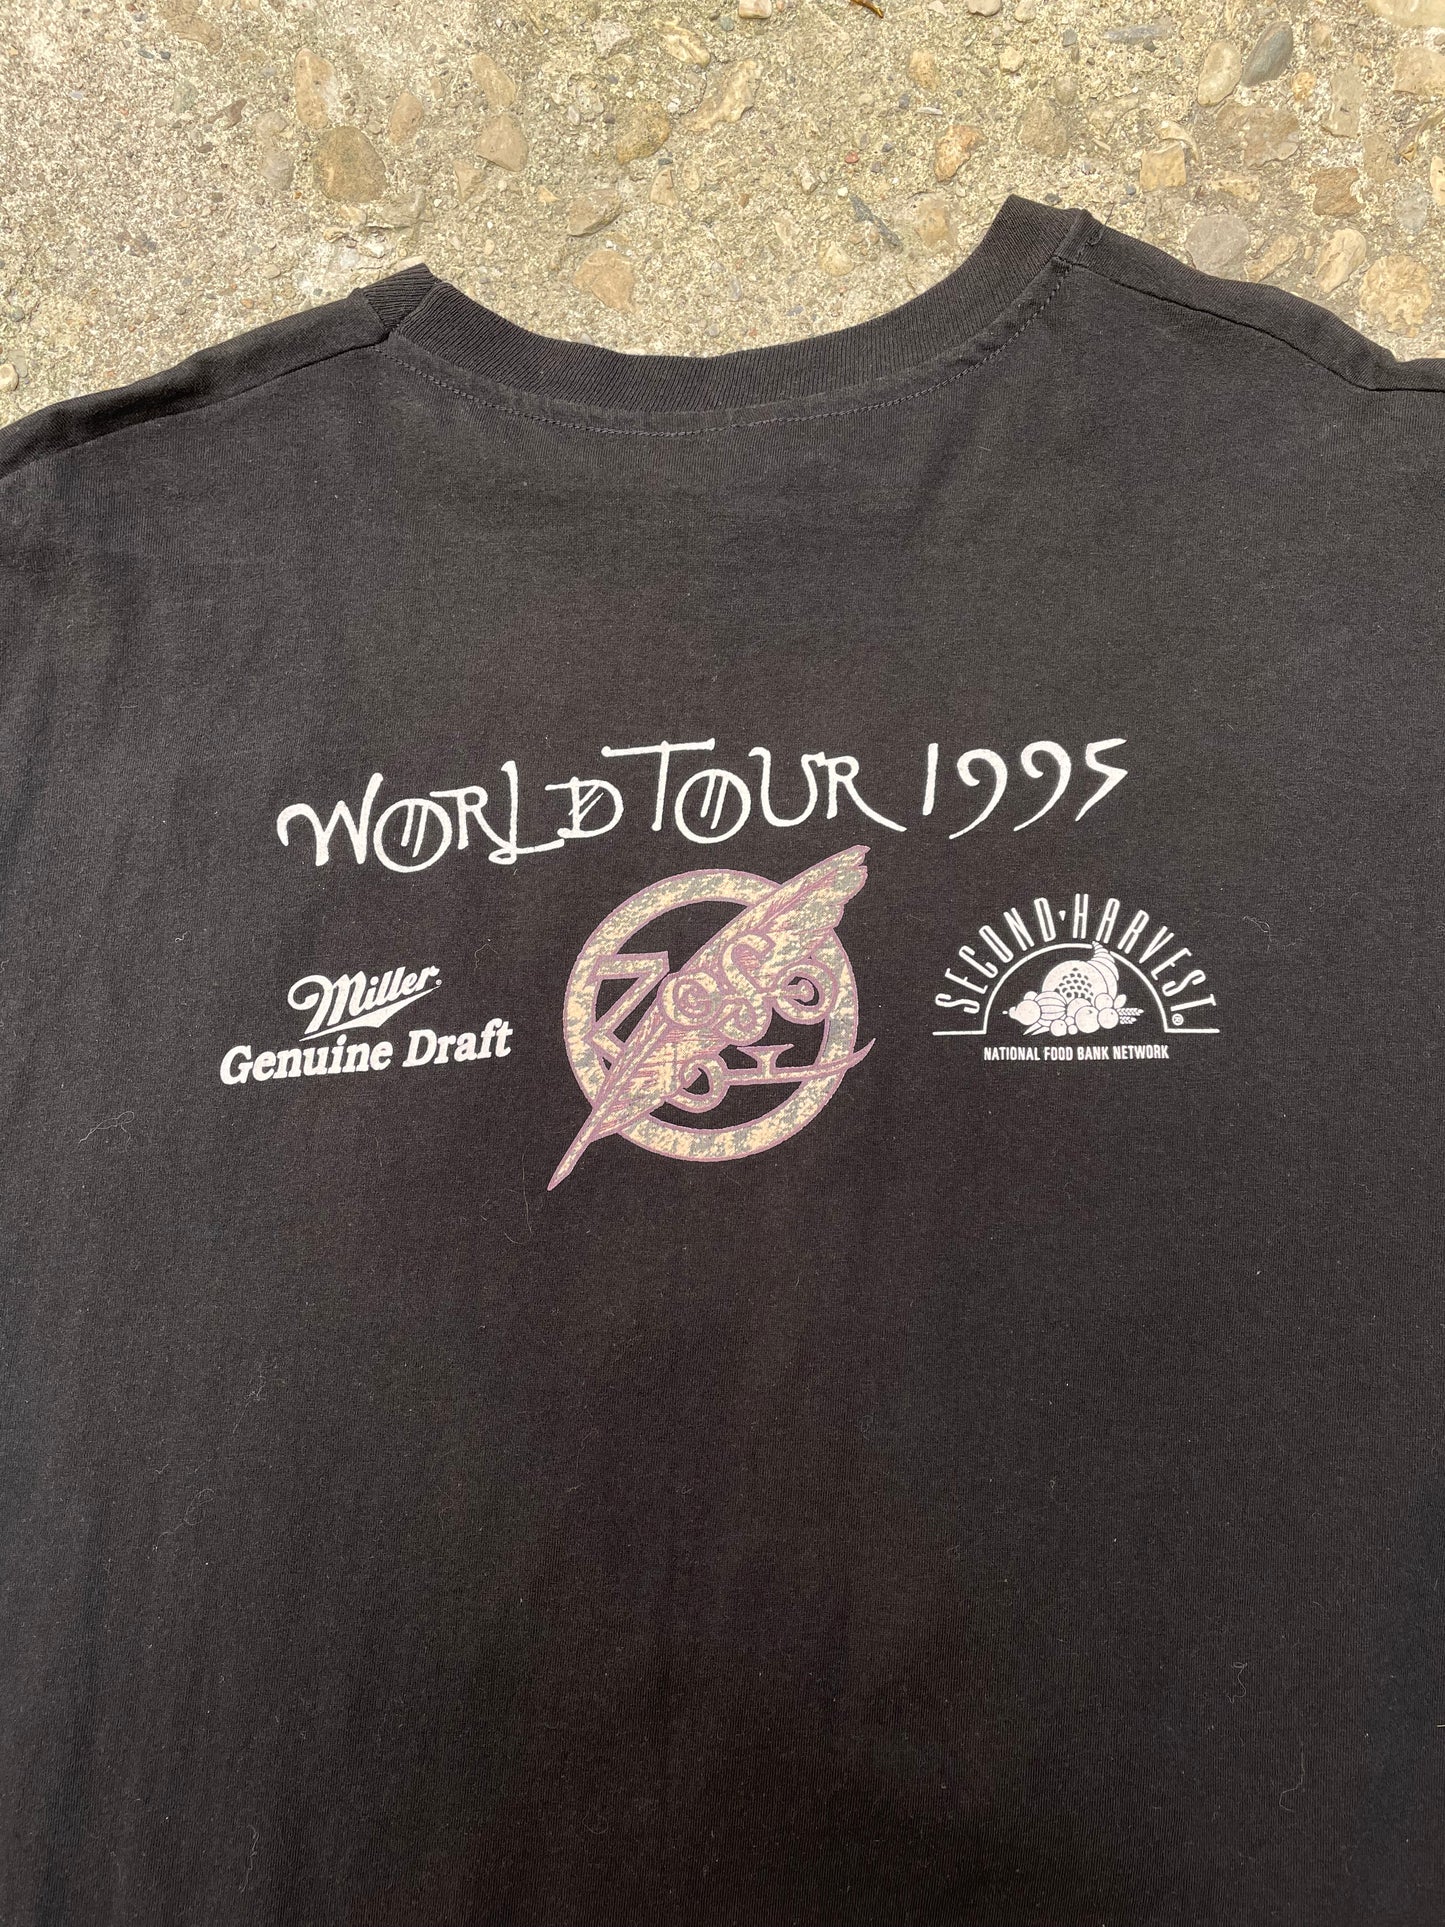 1995 Jimmy Page & Robert Plant 'No Quarter' World Tour Graphic Band T-Shirt - XL